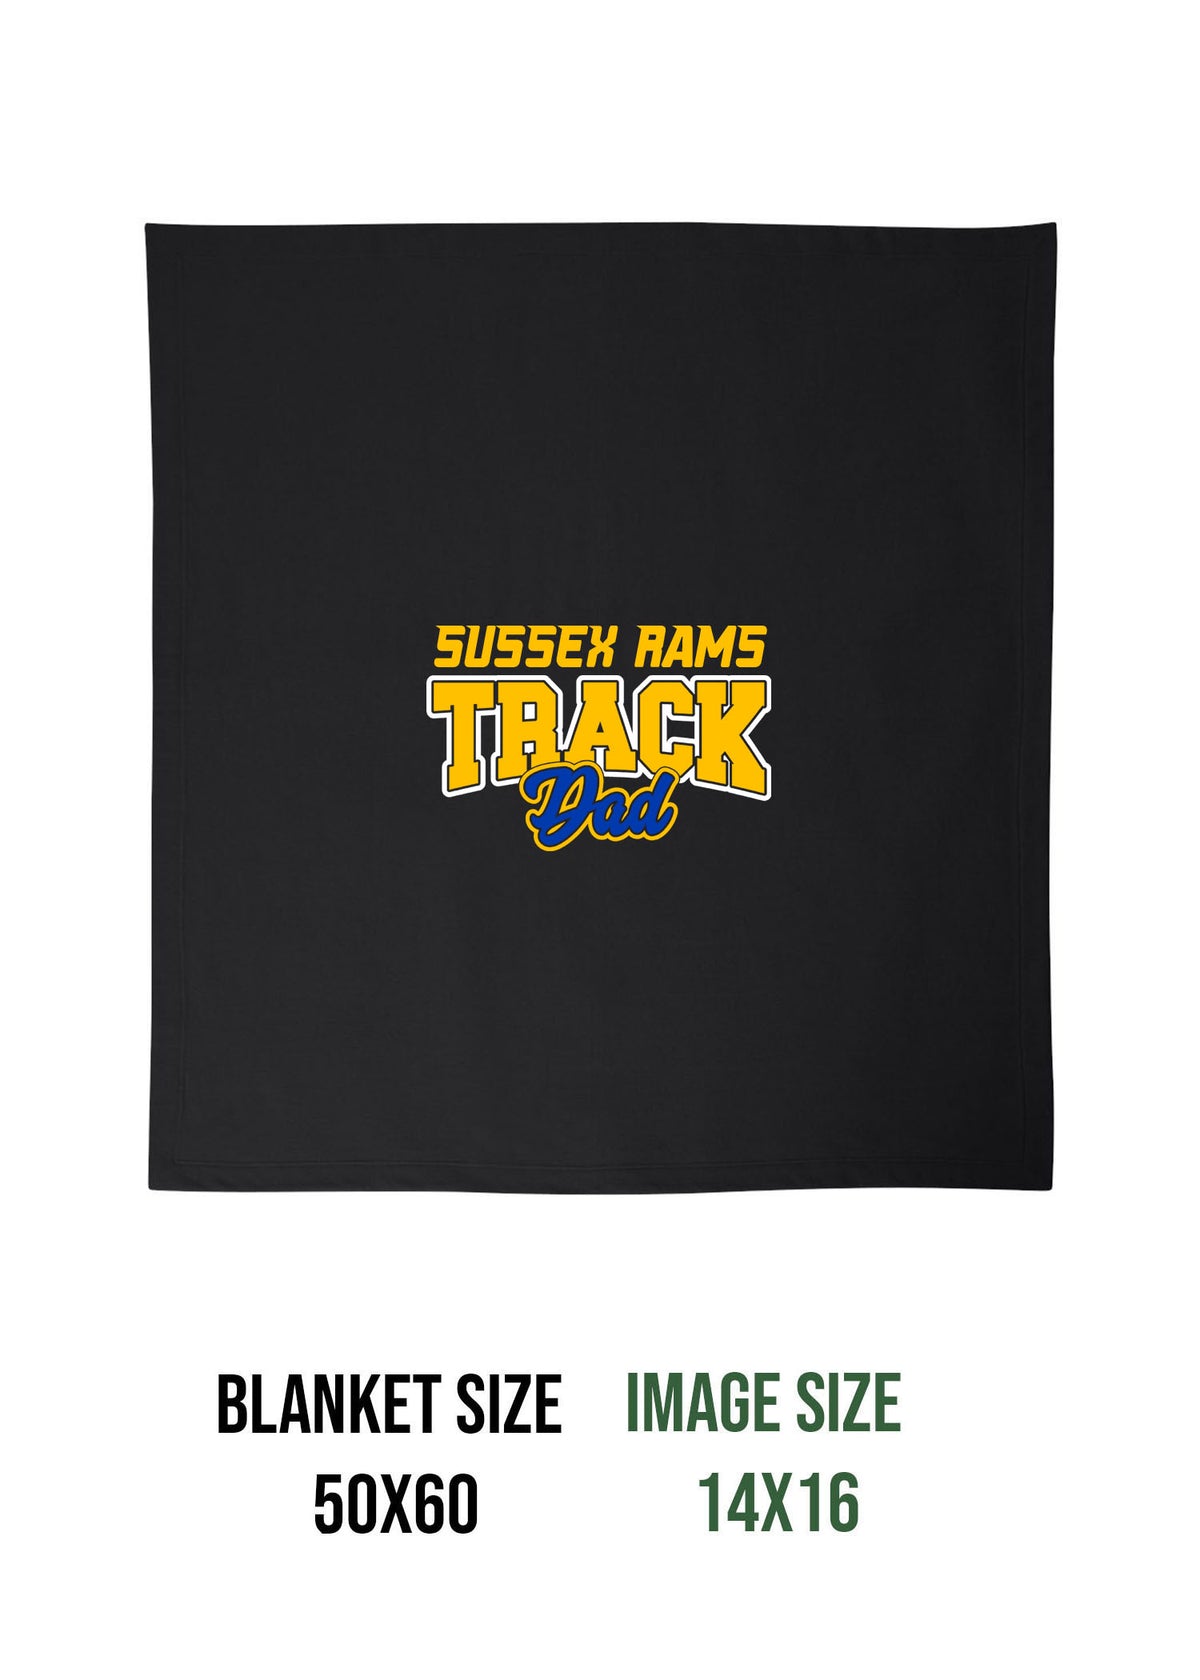 Sussex Rams Track Blanket Design 1